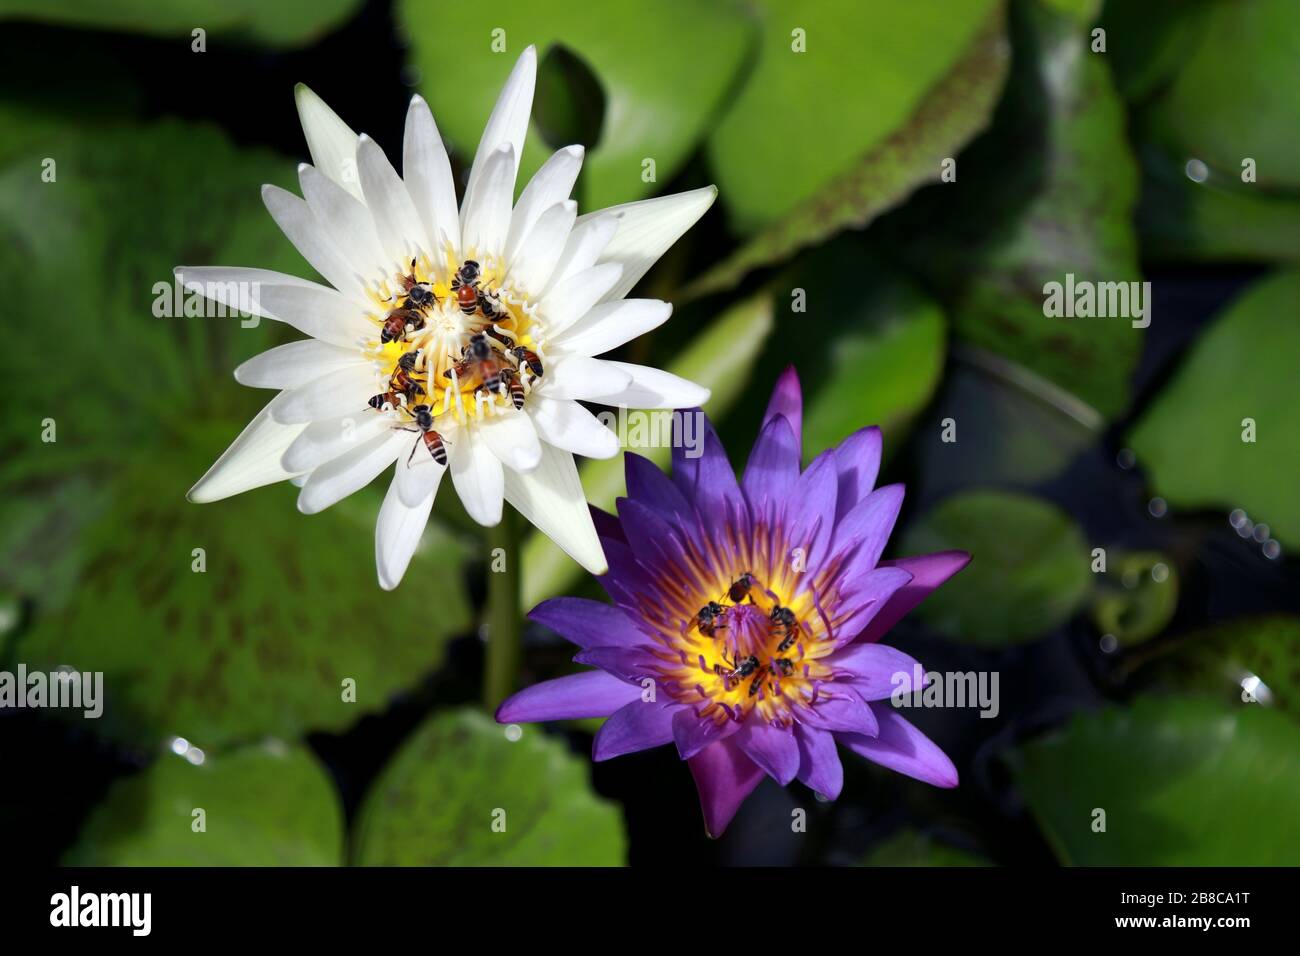 Lotus flower white and purple Stock Photo